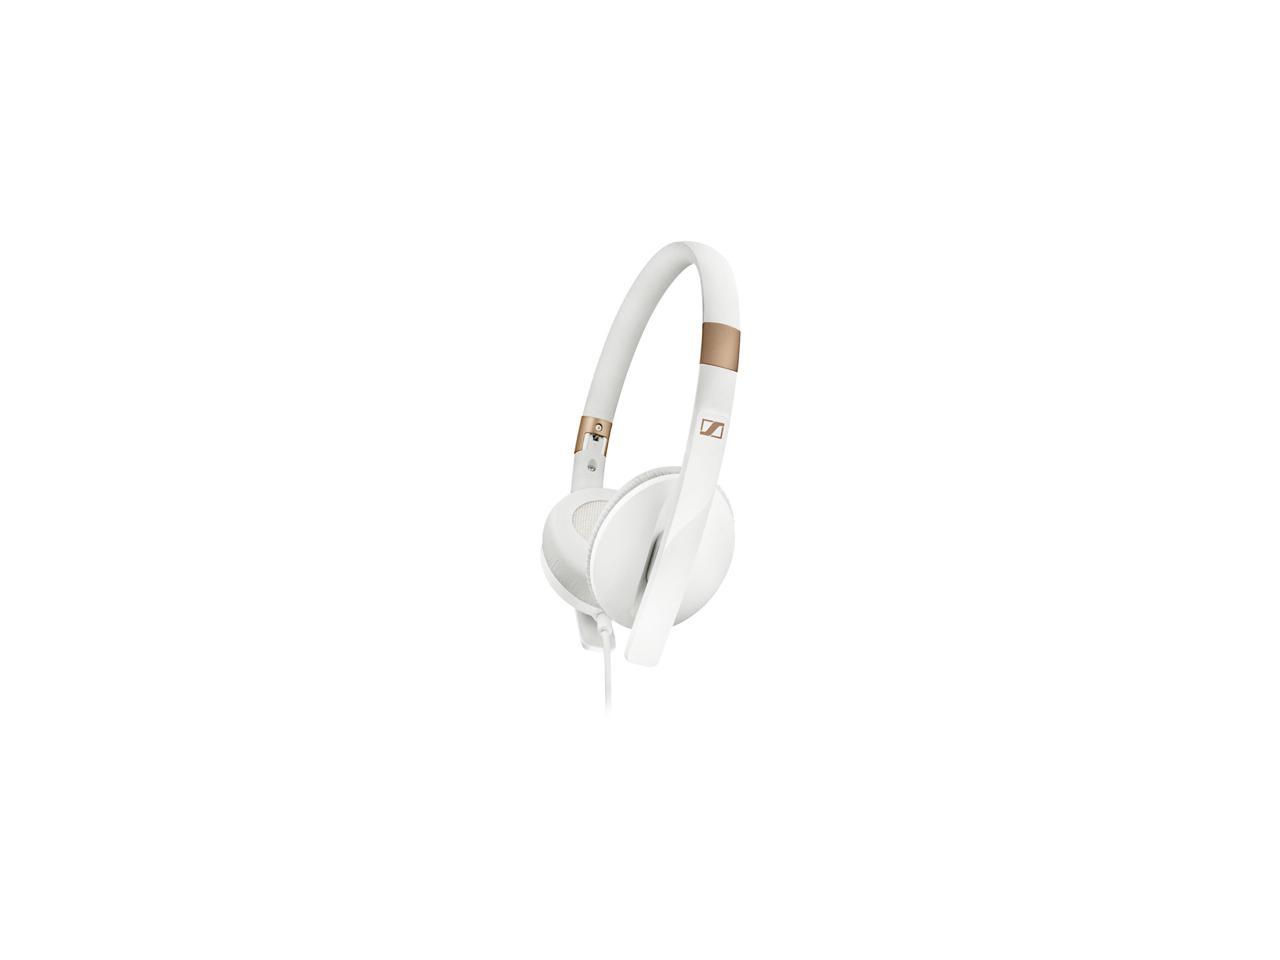 Sennheiser HD On-Ear Headphones $14.99